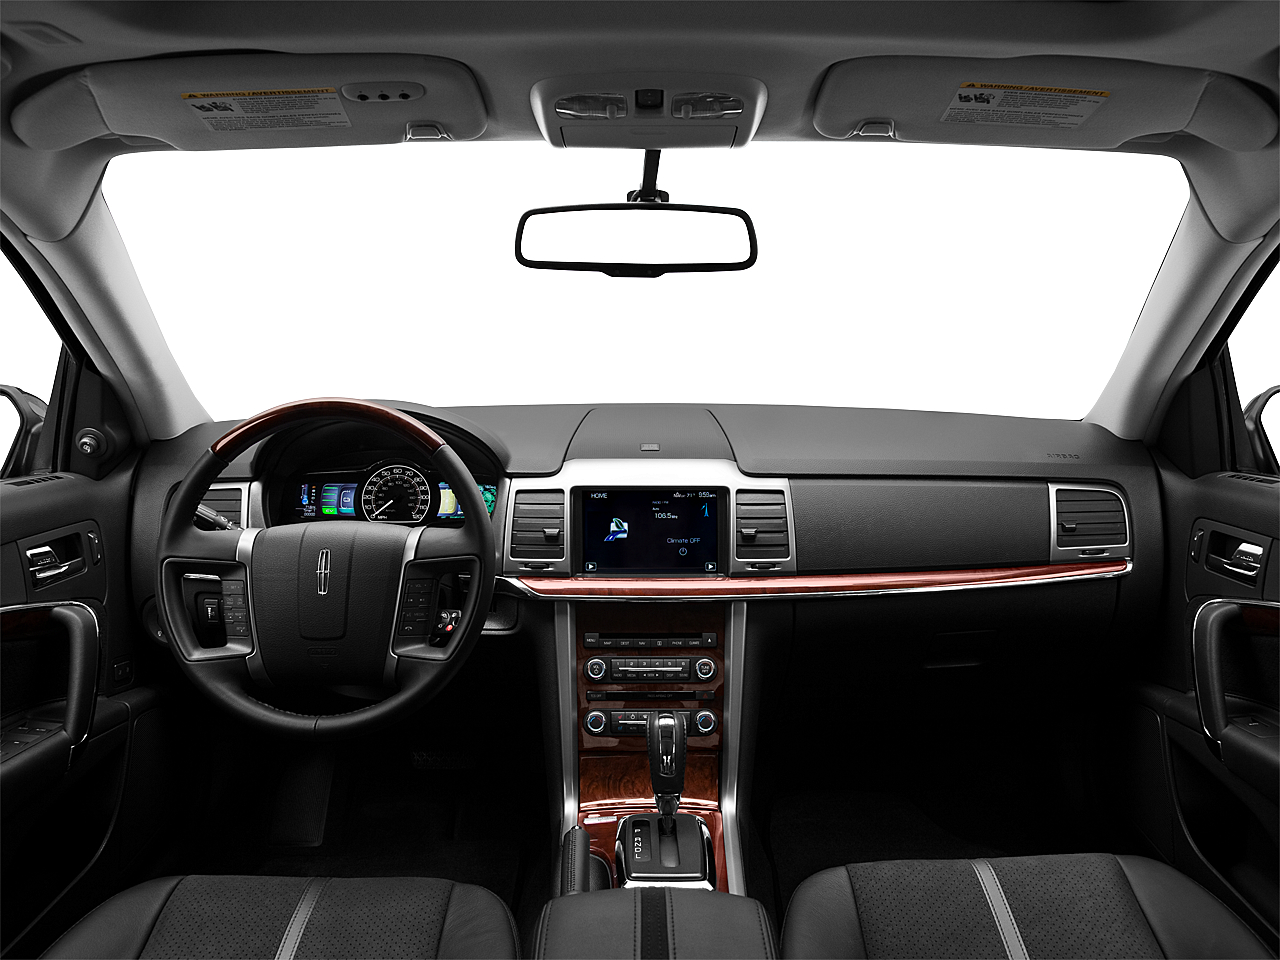 2011 Lincoln MKZ Hybrid 4dr Sedan - Research - GrooveCar